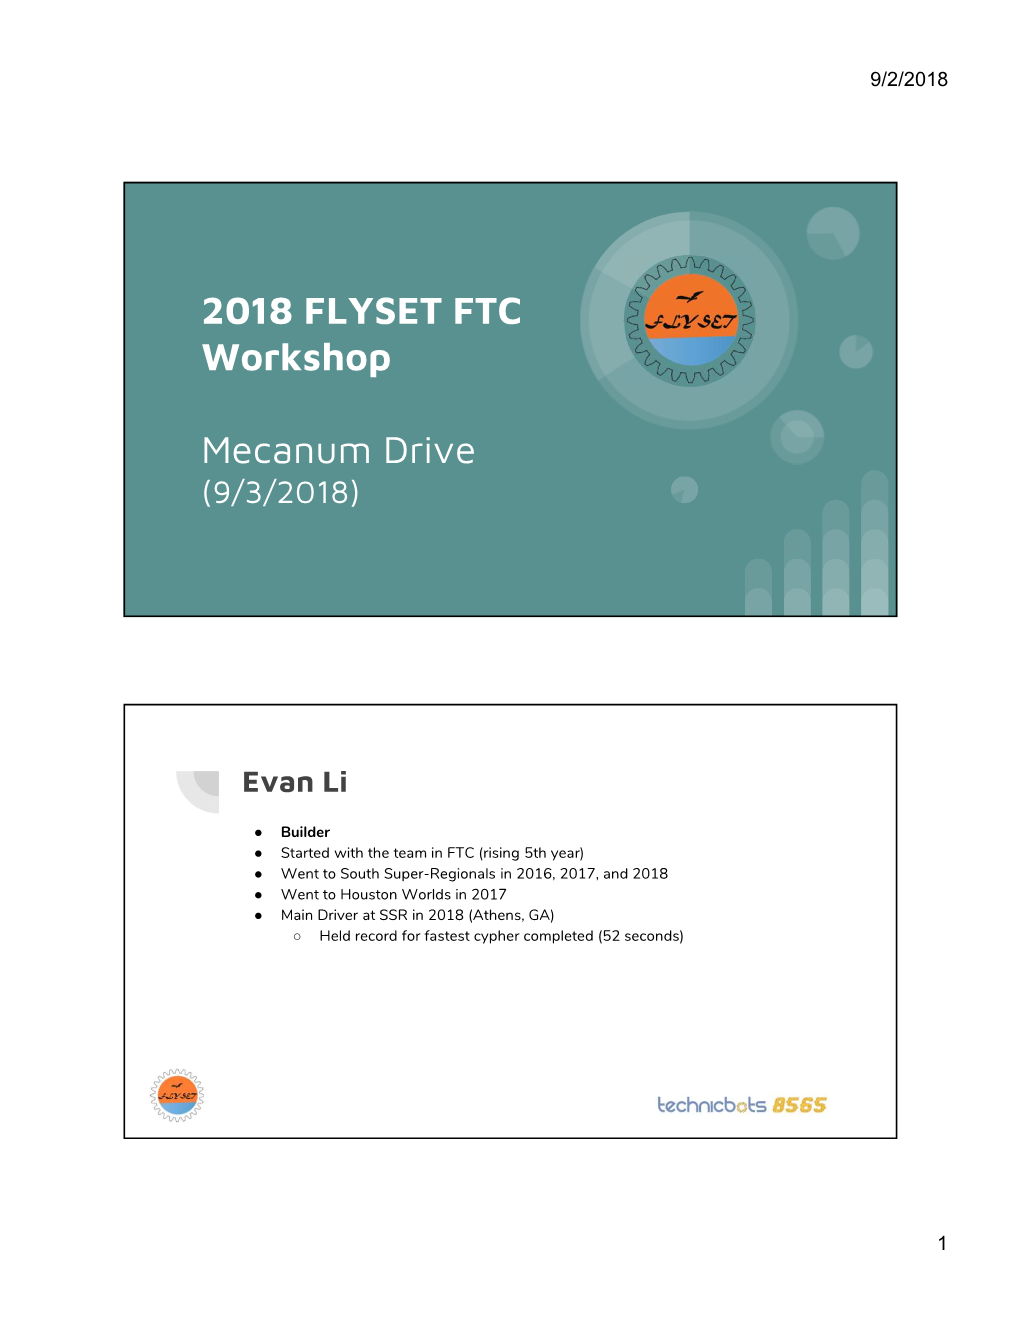 2018 FLYSET FTC Workshop Mecanum Drive